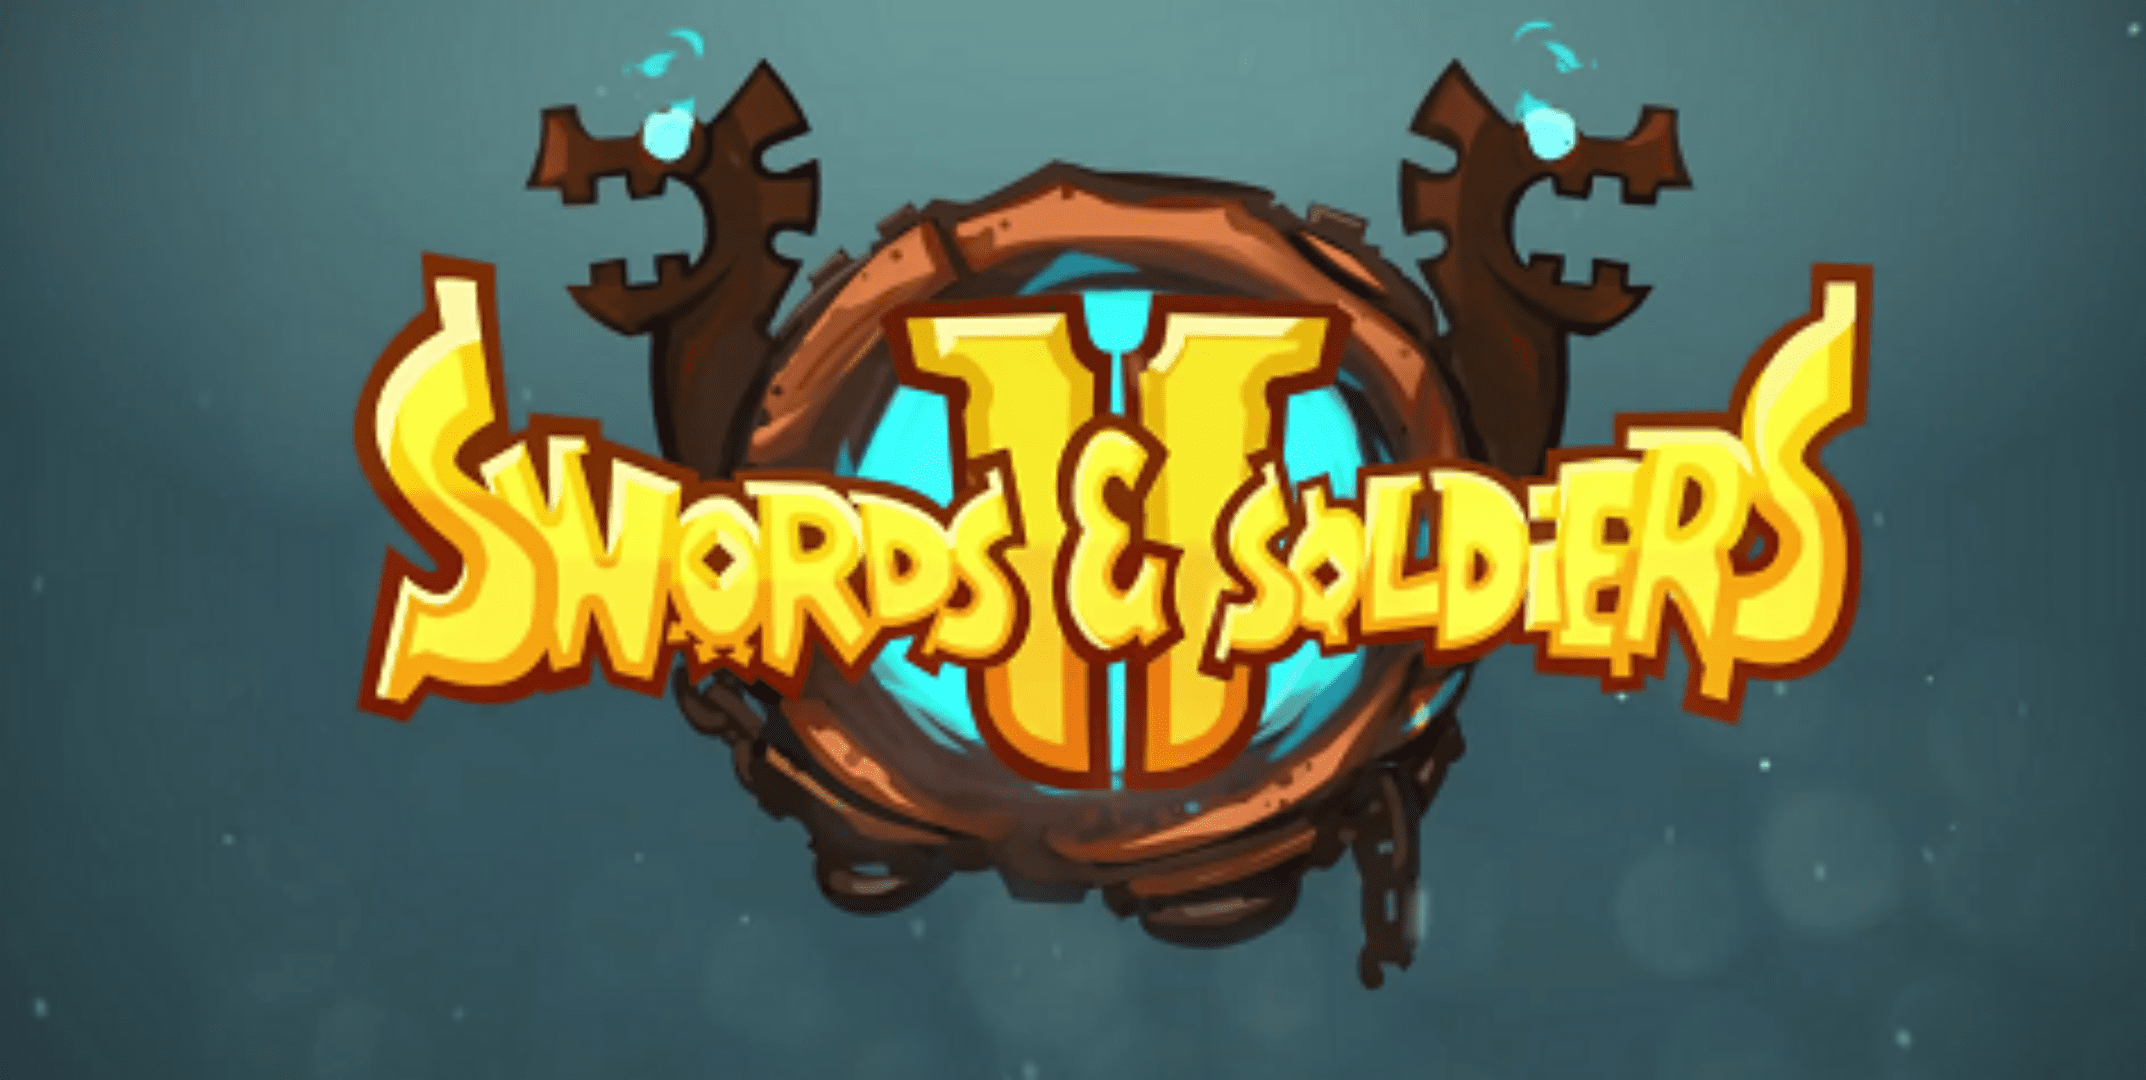 IndieCade 2014: Swords & Soldiers 2